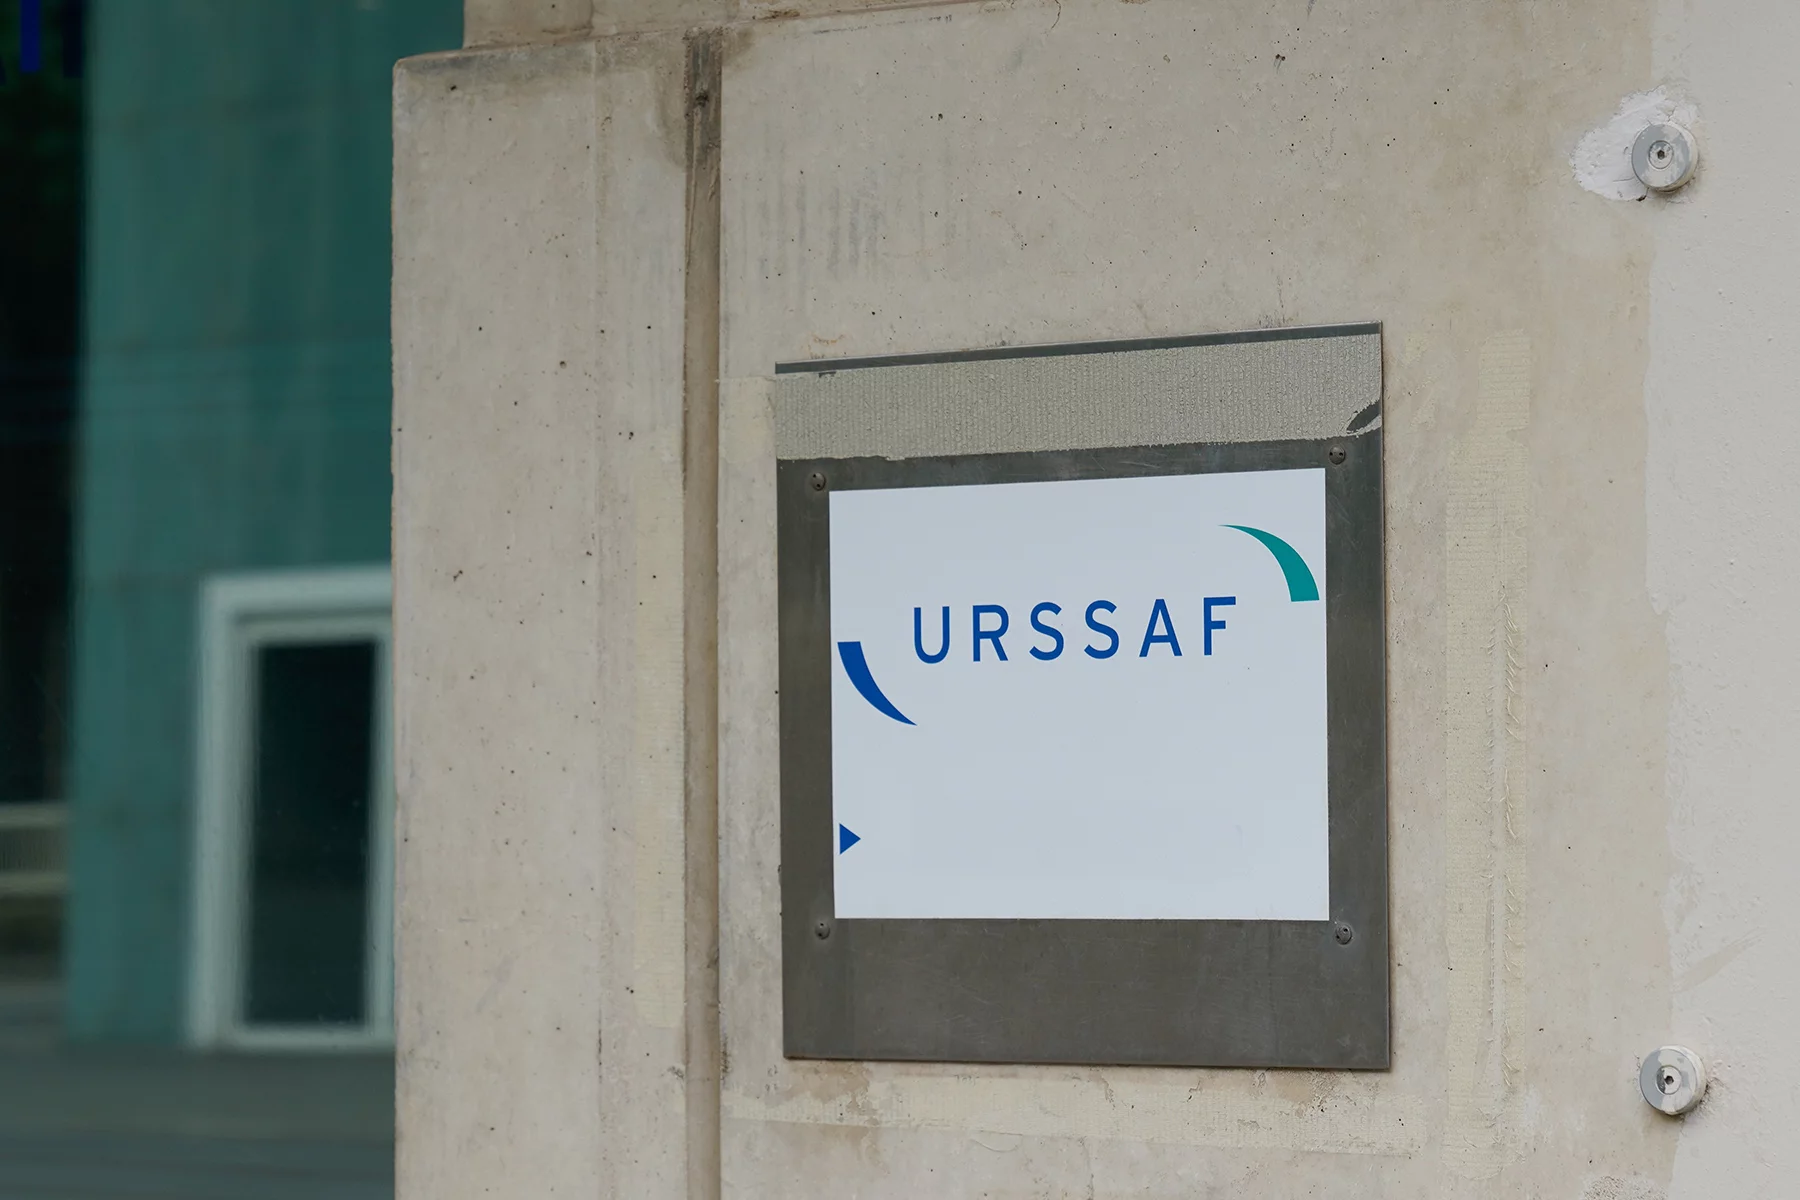 An URSSAF office in Bordeaux, France